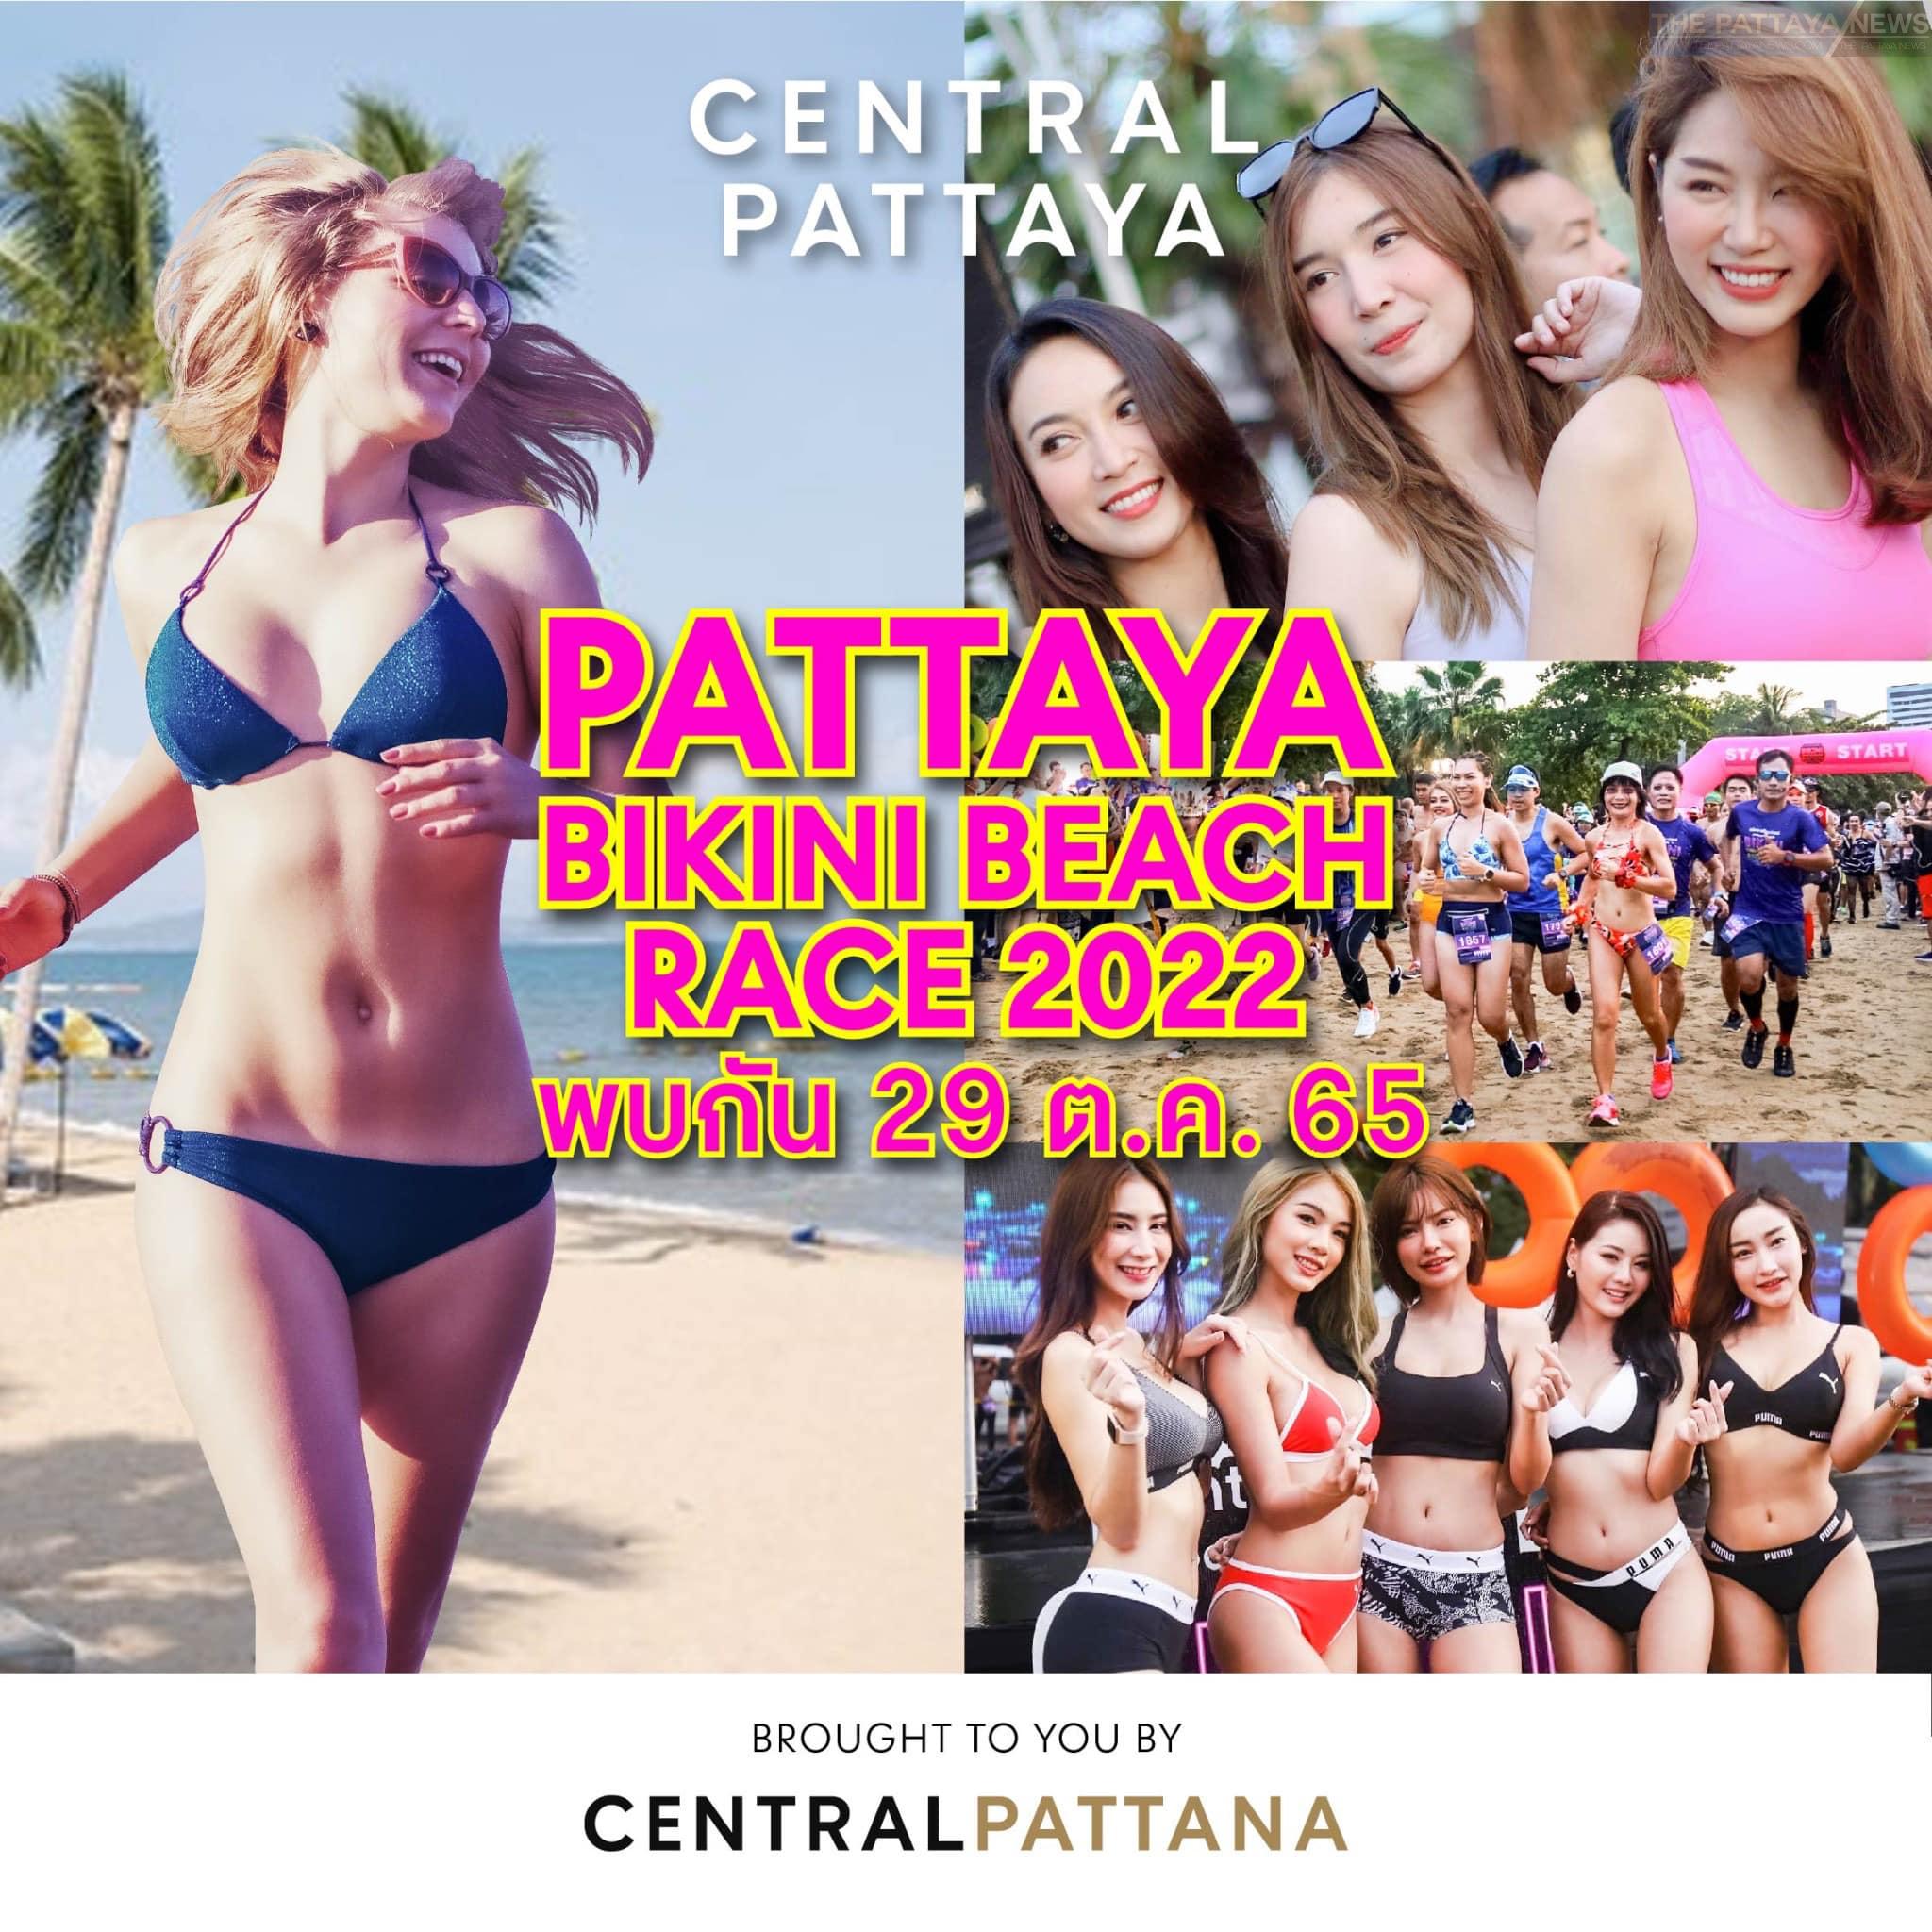 Pattaya to host “Bikini Beach Race 2022” on October 9th